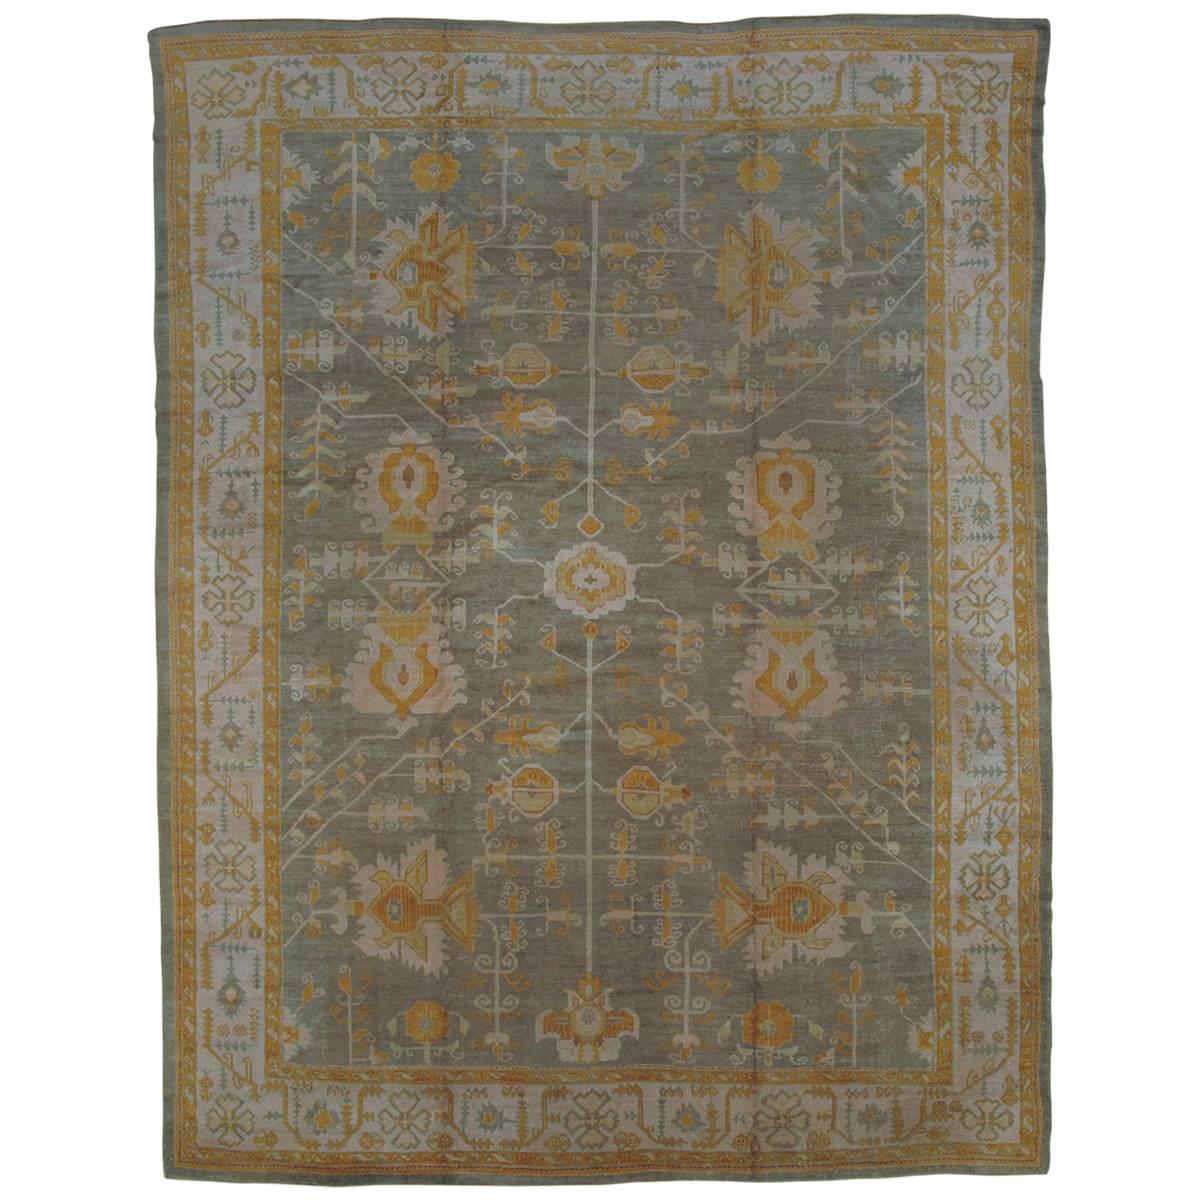 Antique Oushak Carpet, Oriental Rug, Handmade Grey, Ivory, Saffron